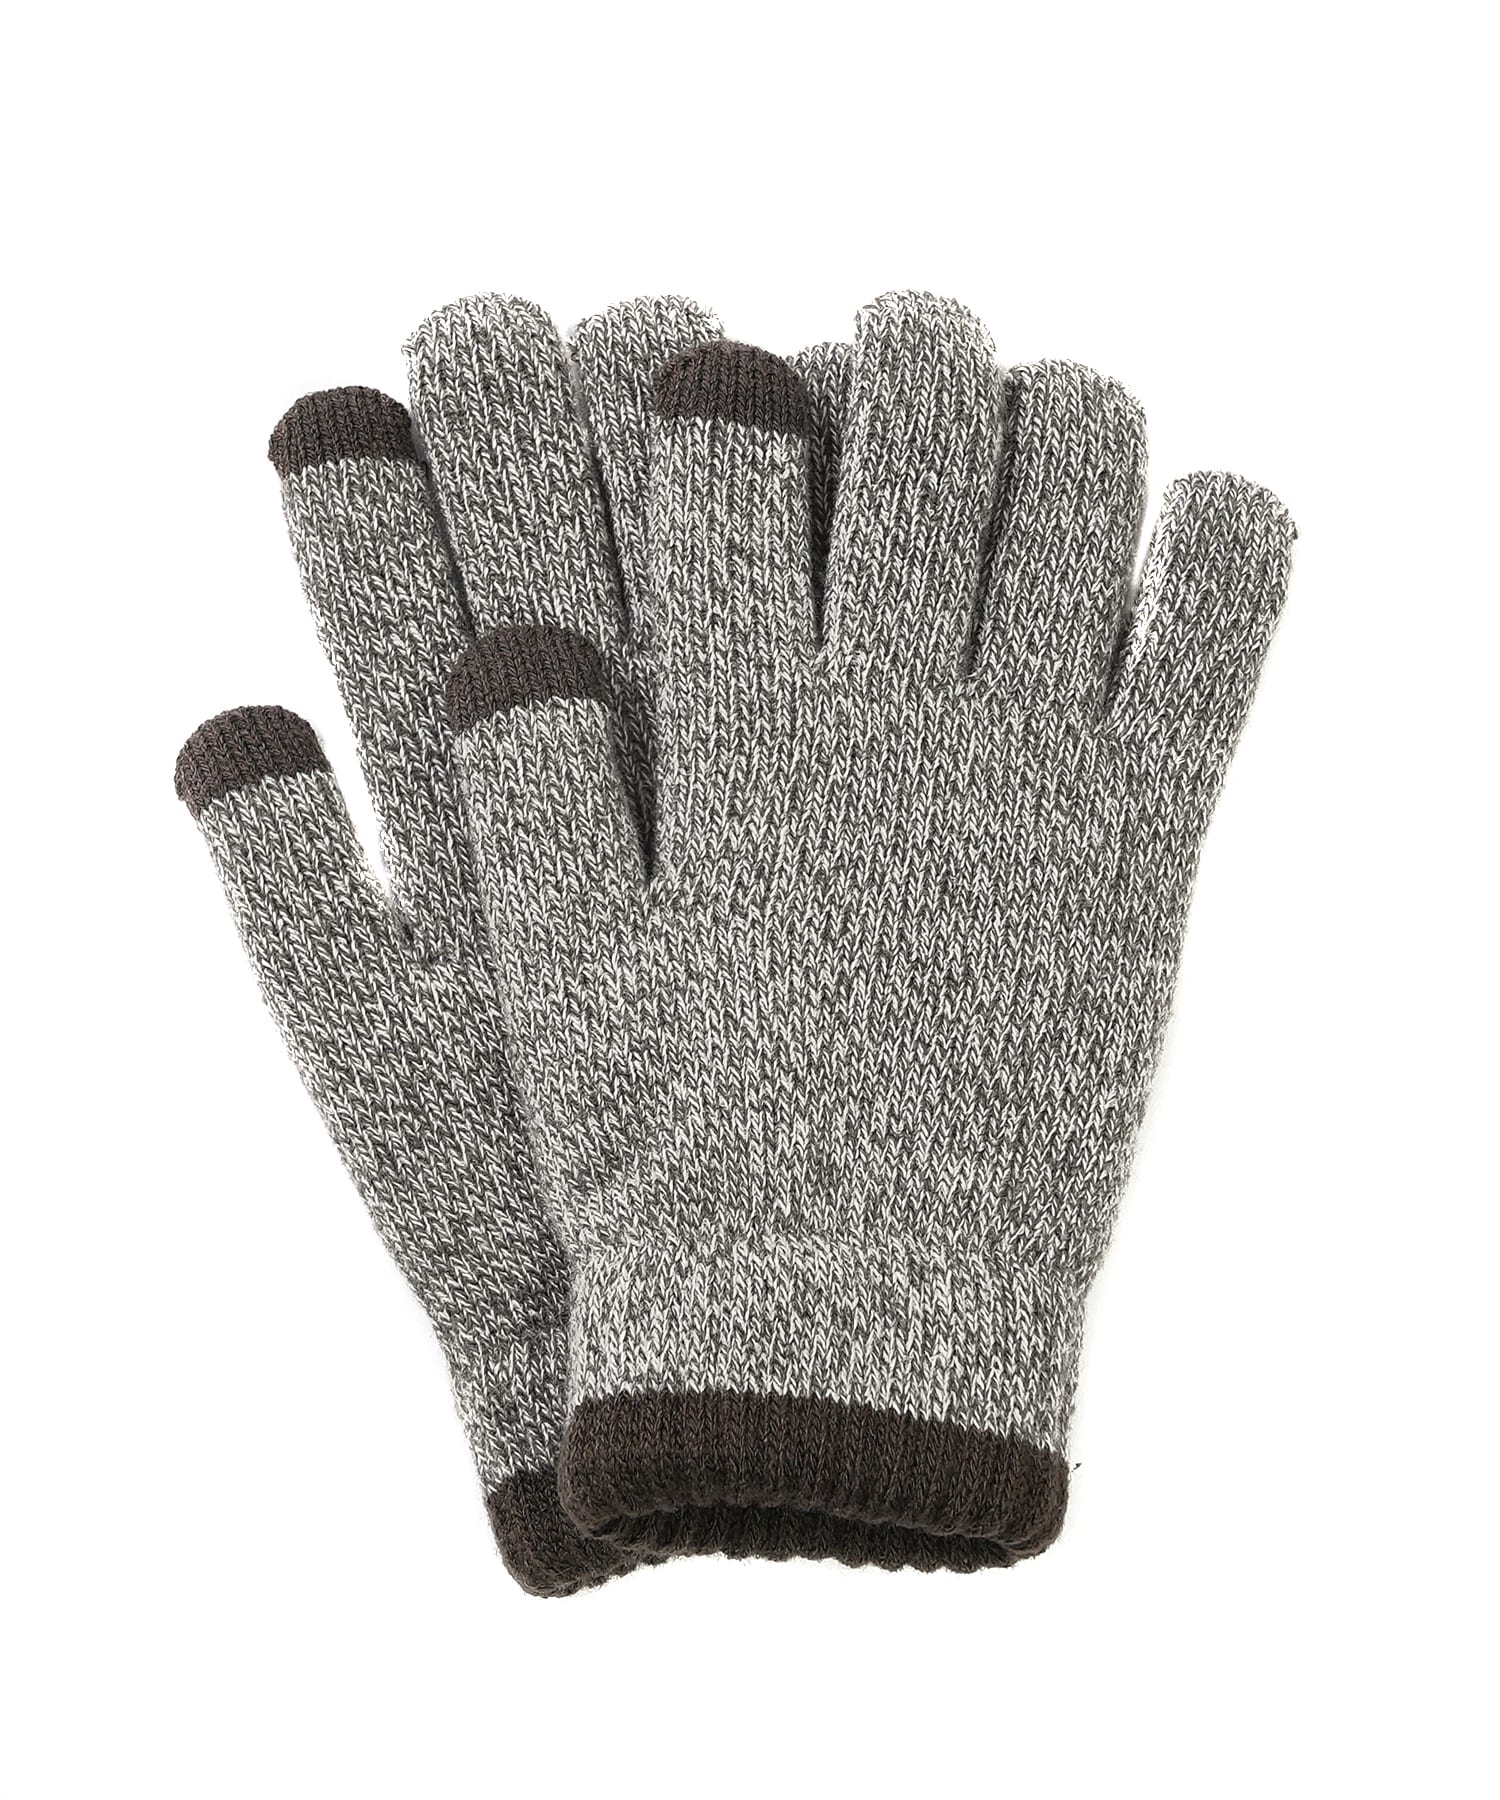 3COINS(スリーコインズ) 【小物使いで冬を楽しむ❄】2重構造スマホ対応杢調手袋